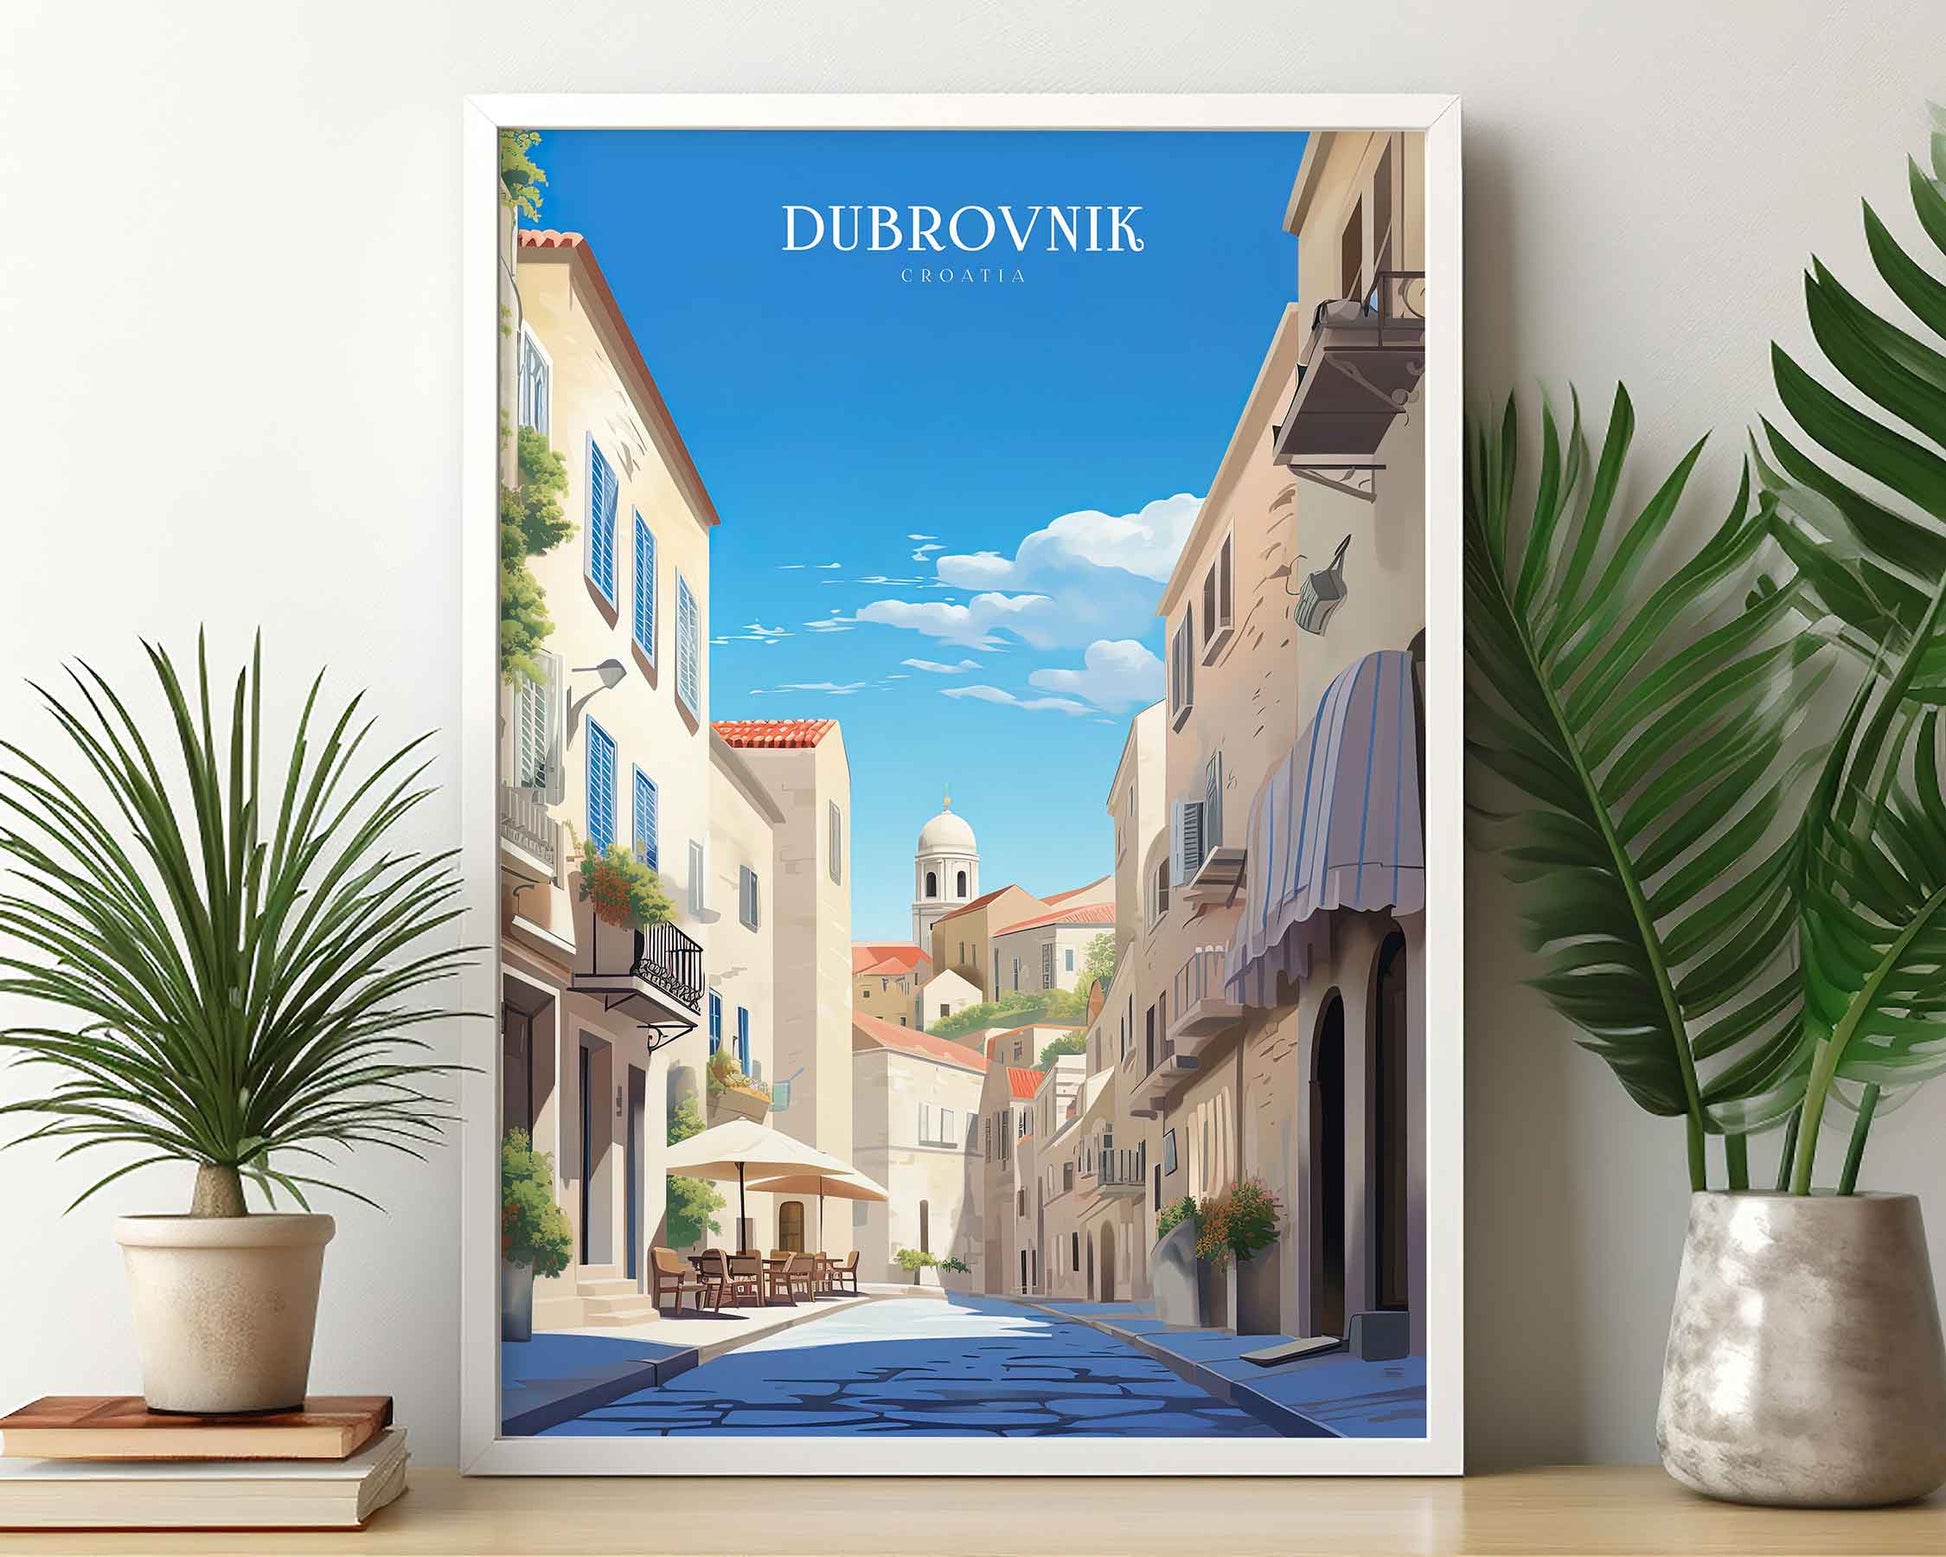 Framed Image of Dubrovnik Croatia Wall Art Print Travel Posters Illustration